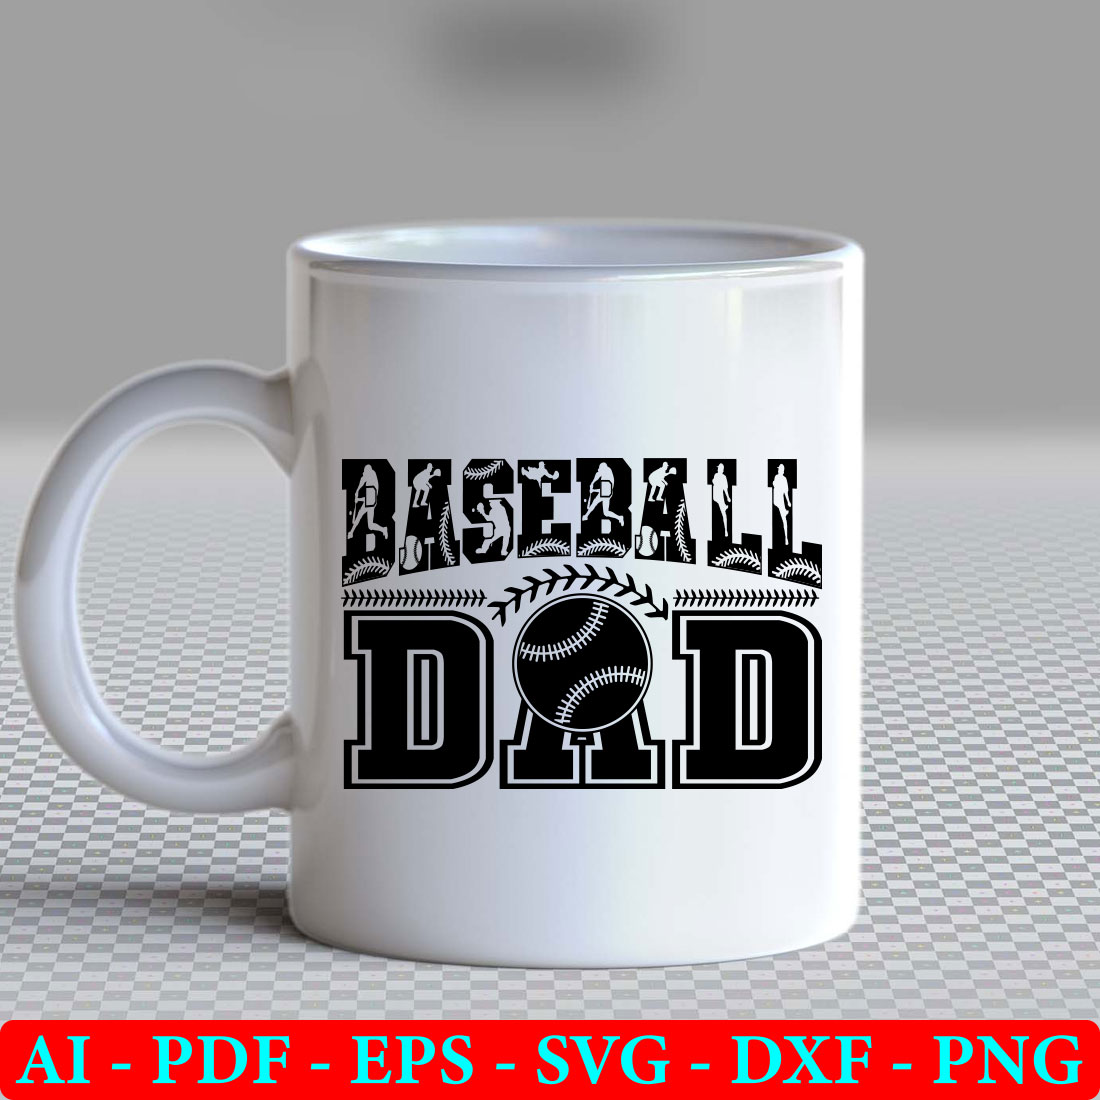 White coffee mug with a baseball dad on it.